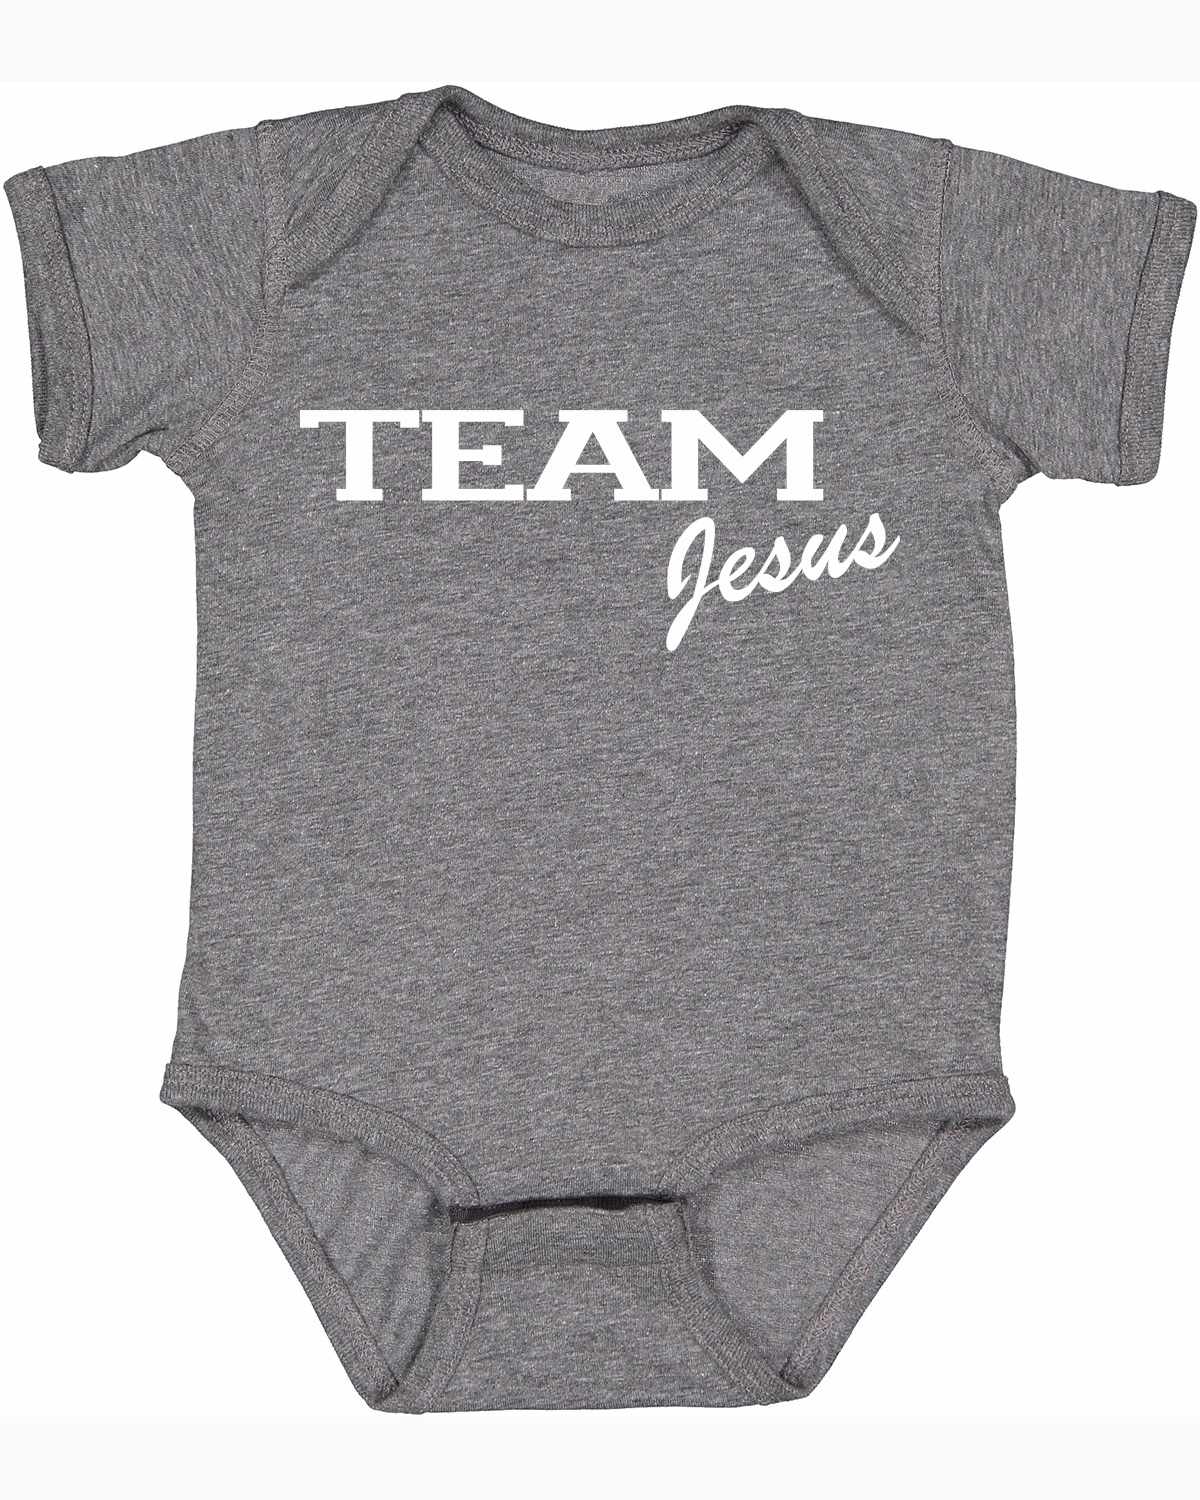 TEAM Jesus Infant BodySuit